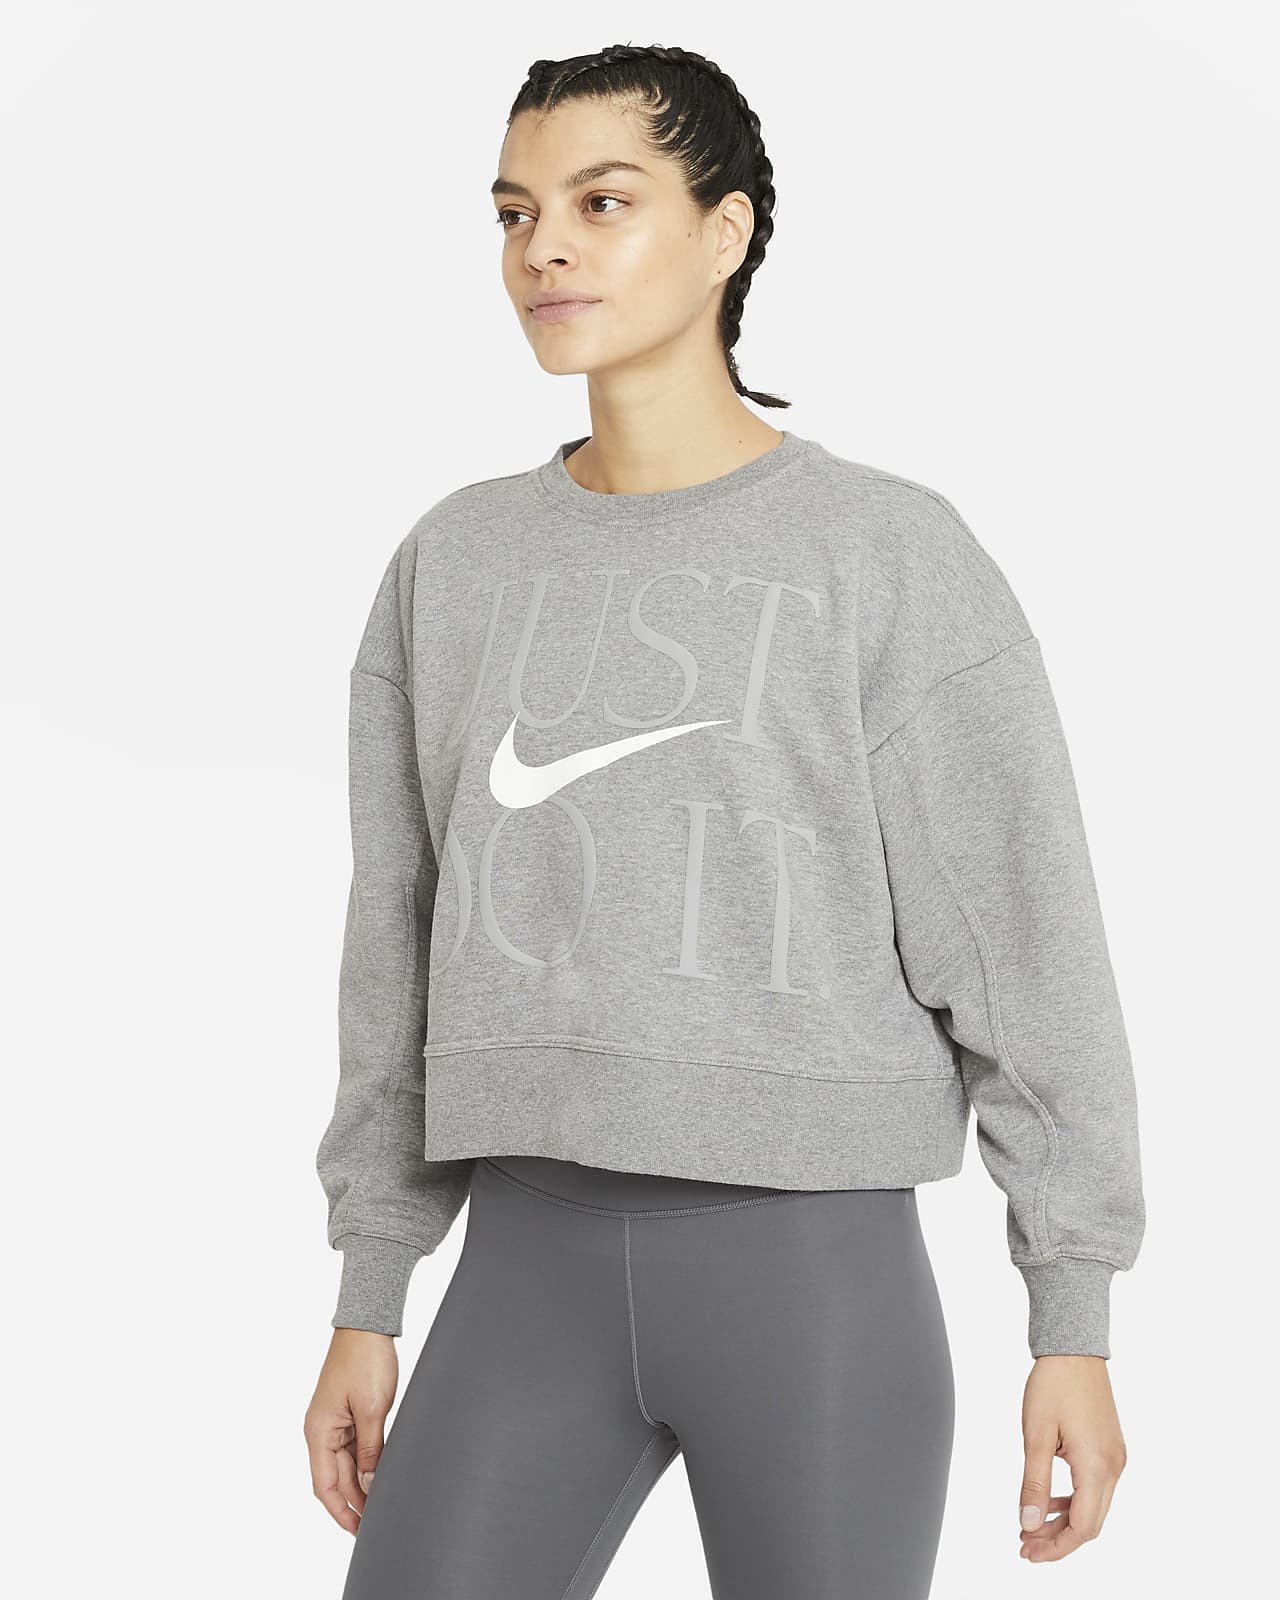 Nike Get Fit Women's Training Crew. LU